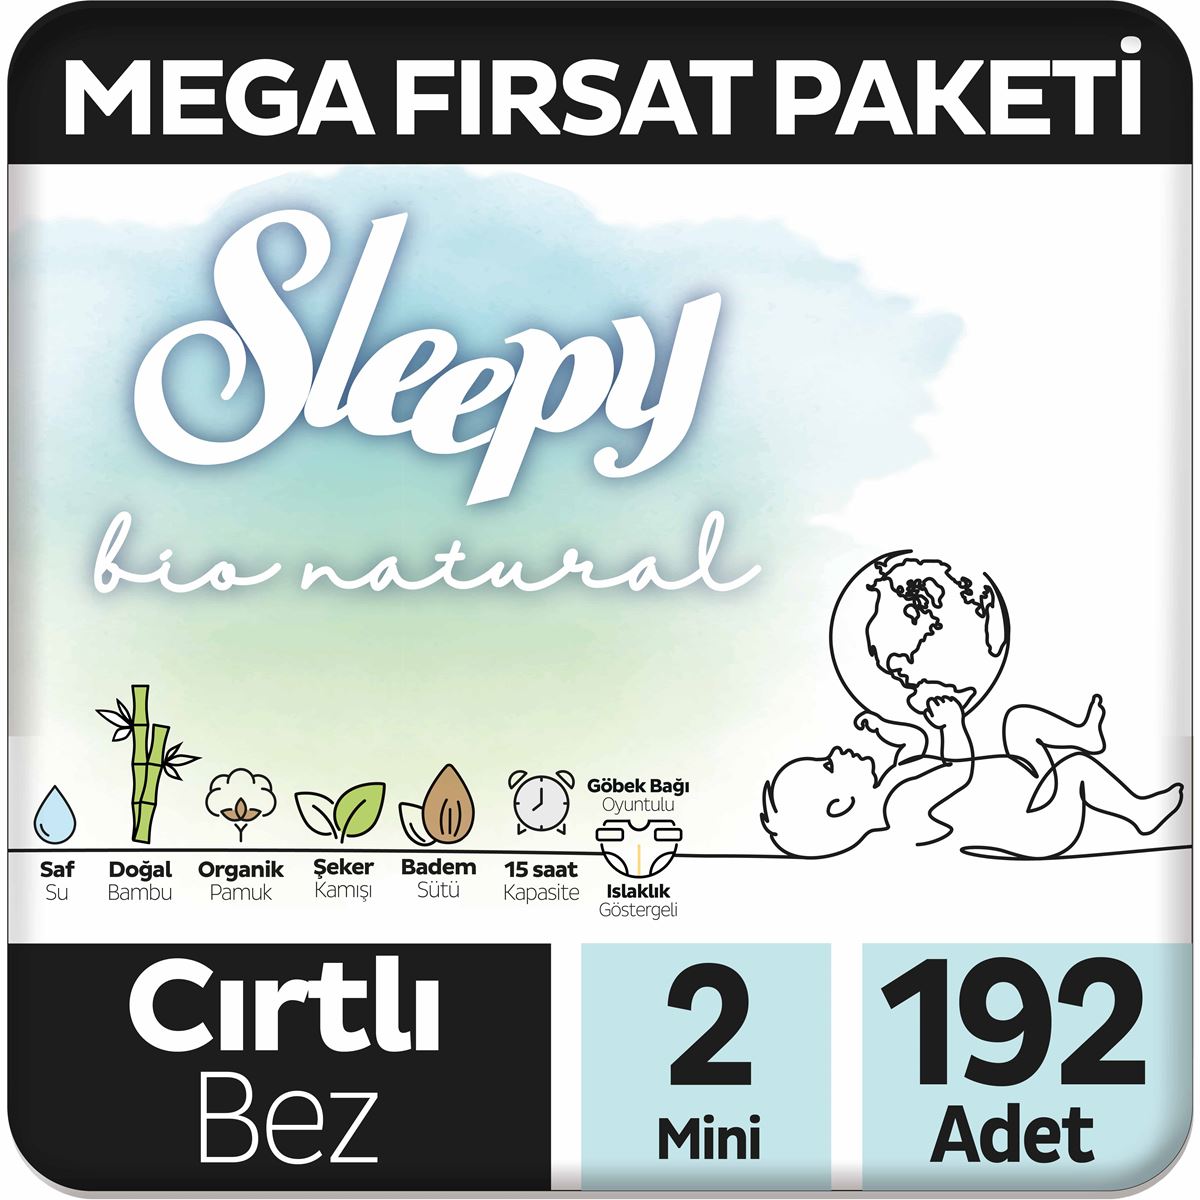 Sleepy Bio Natural Mega Fırsat Paketi Bebek Bezi 2 Numara Mini 192 Adet